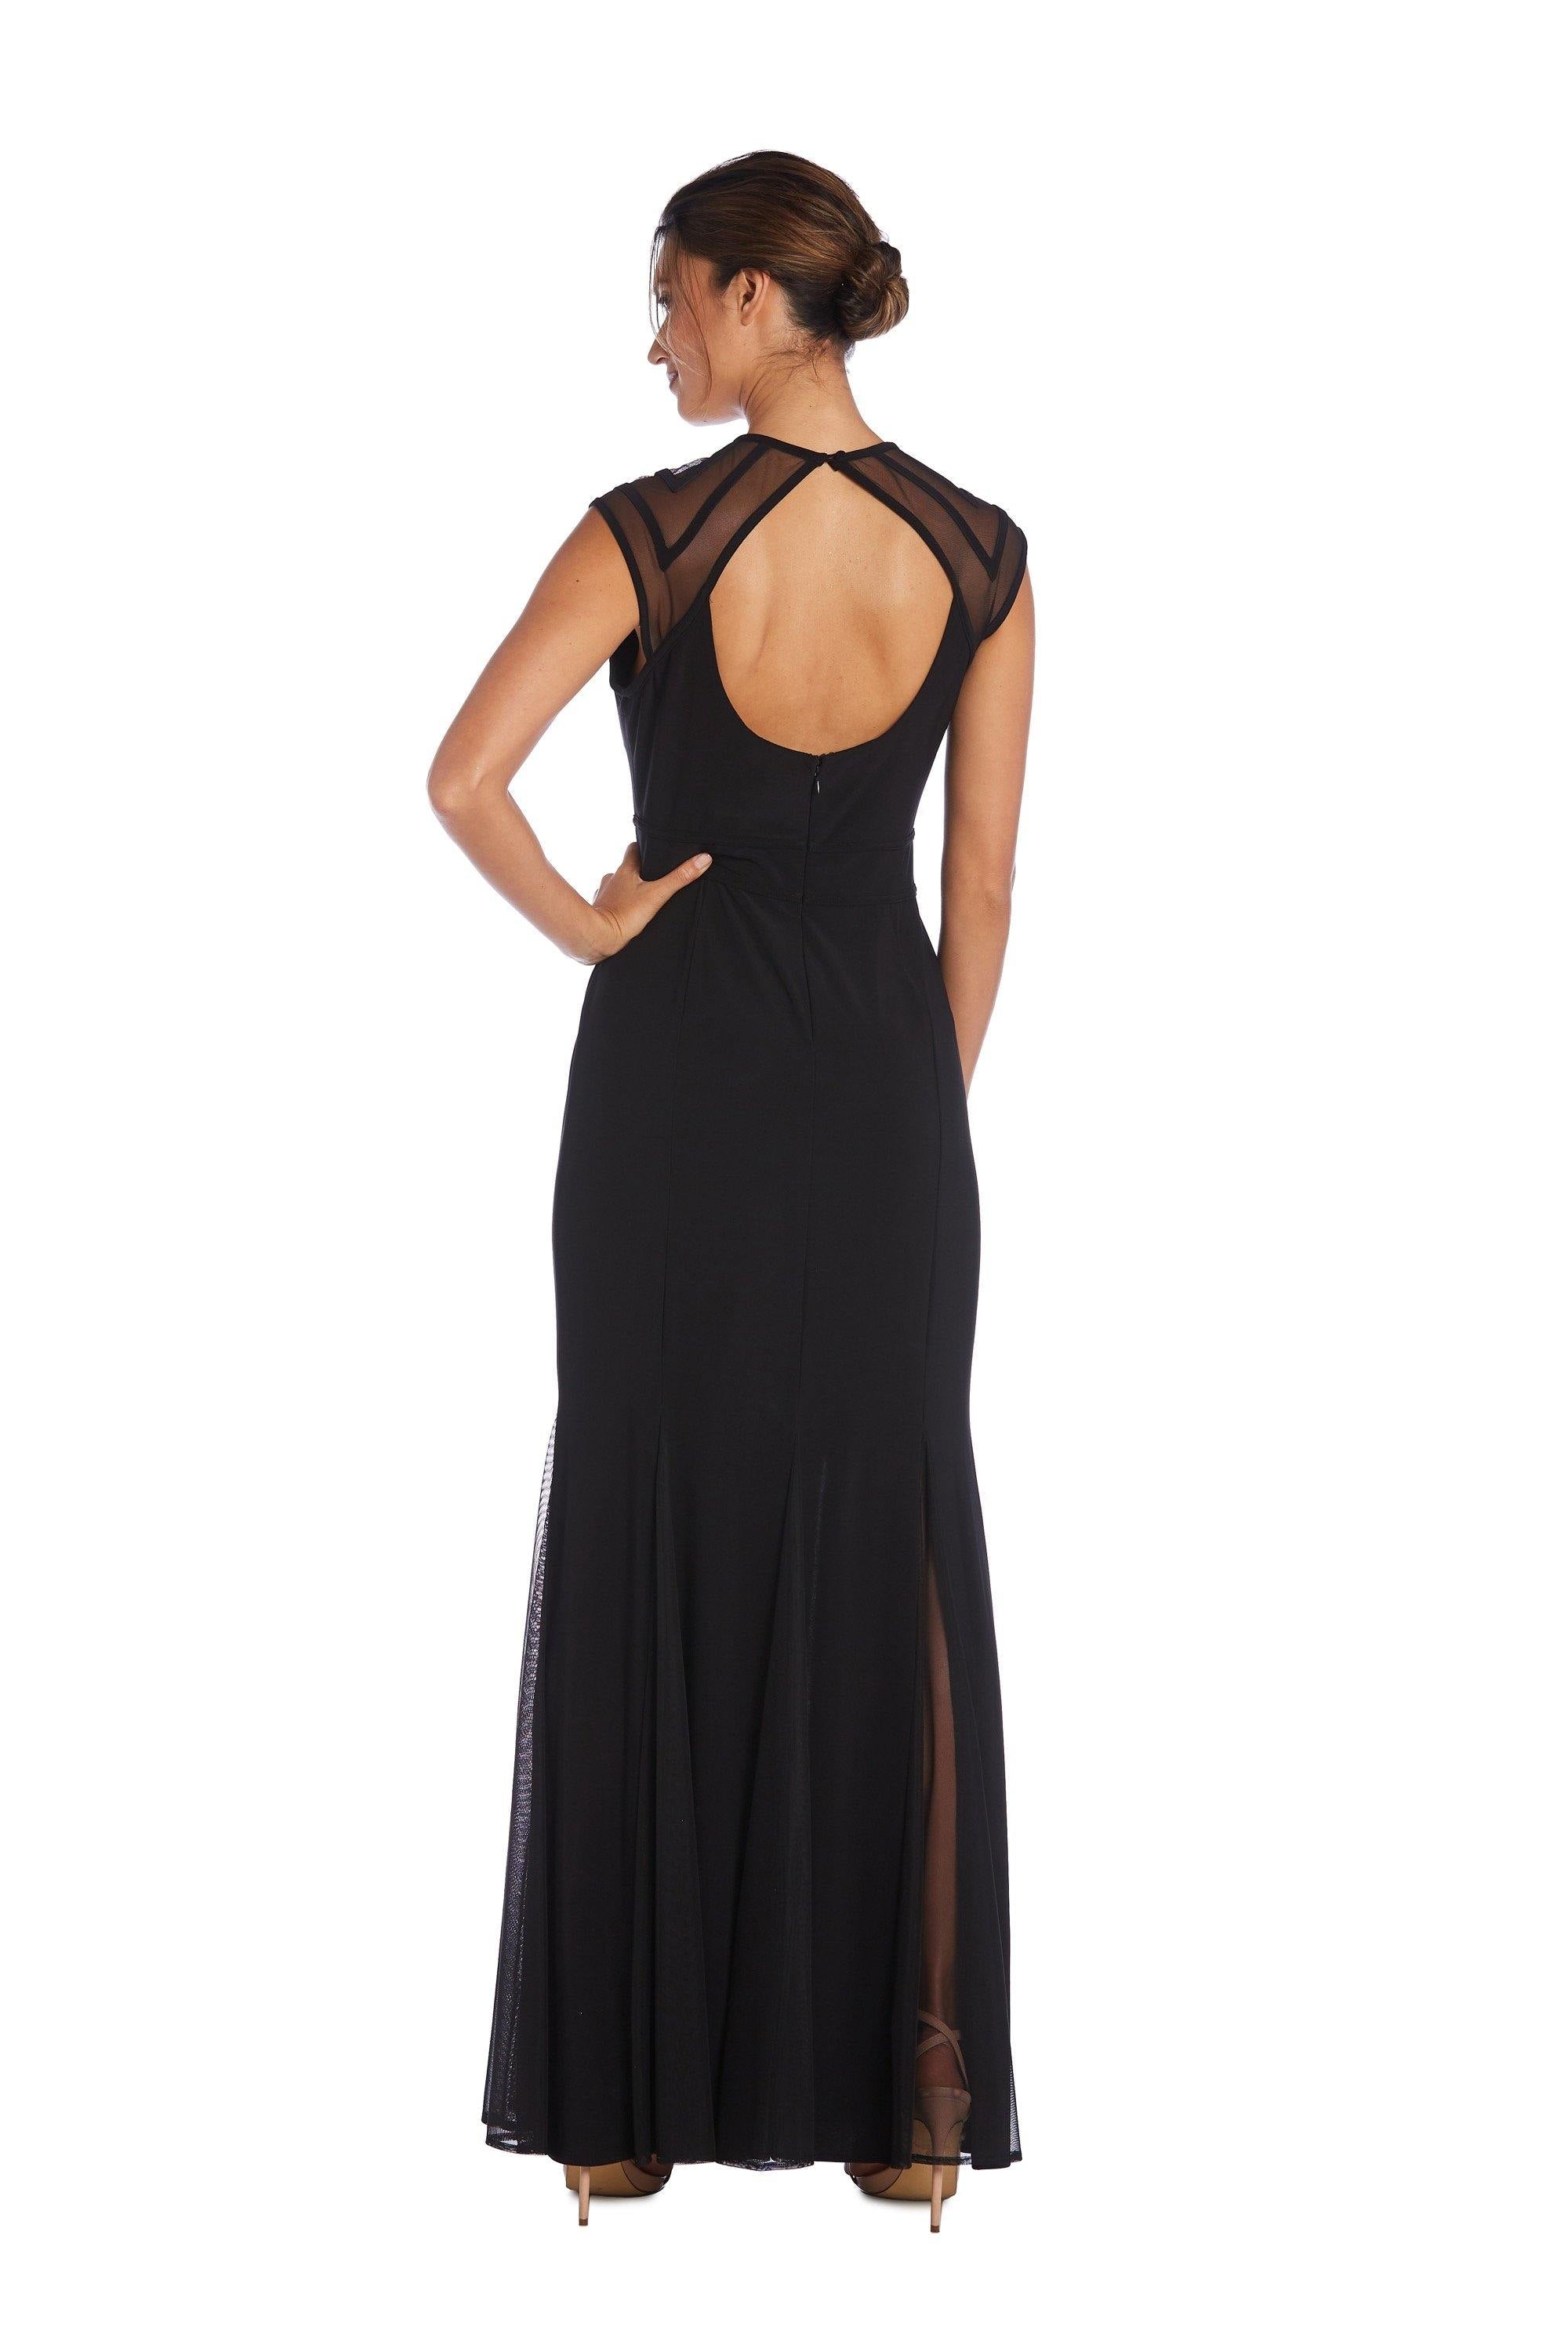 Nightway Long Formal Black Dress 21566 - The Dress Outlet